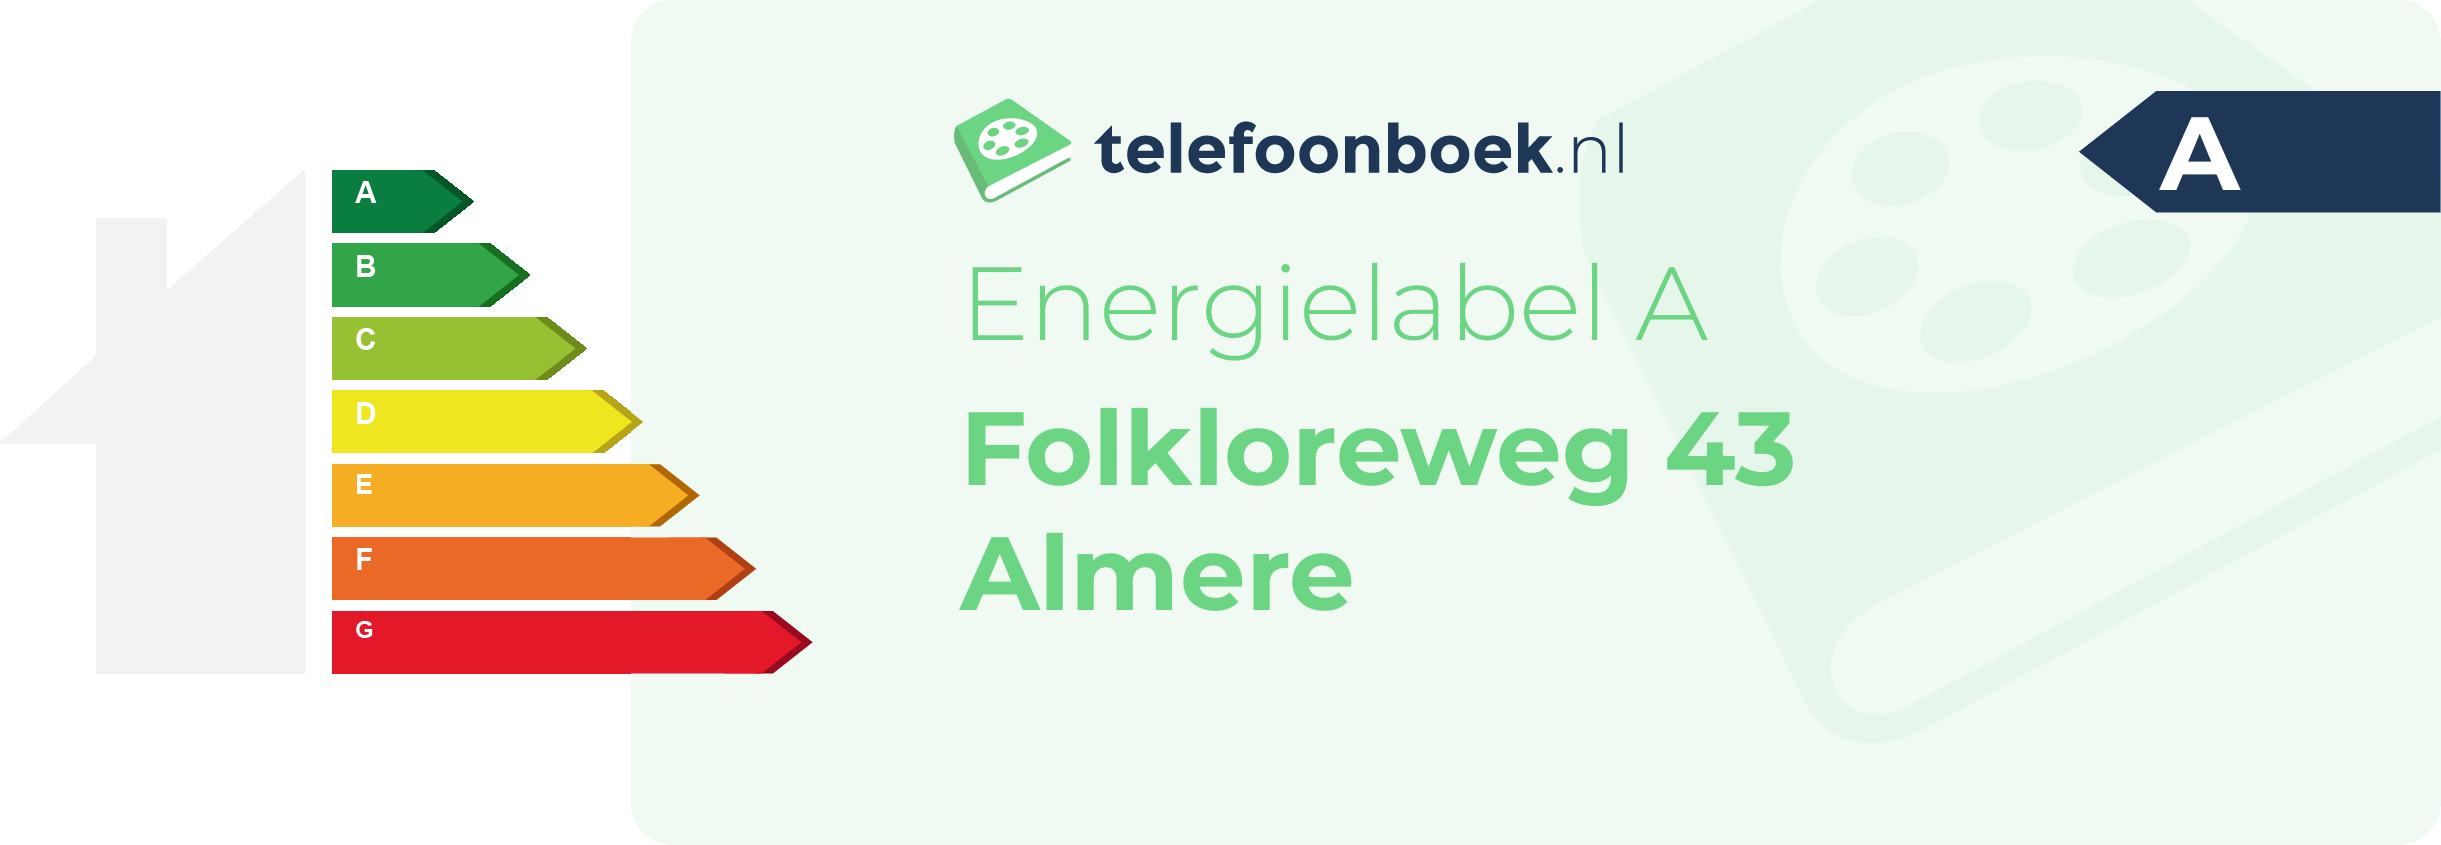 Energielabel Folkloreweg 43 Almere